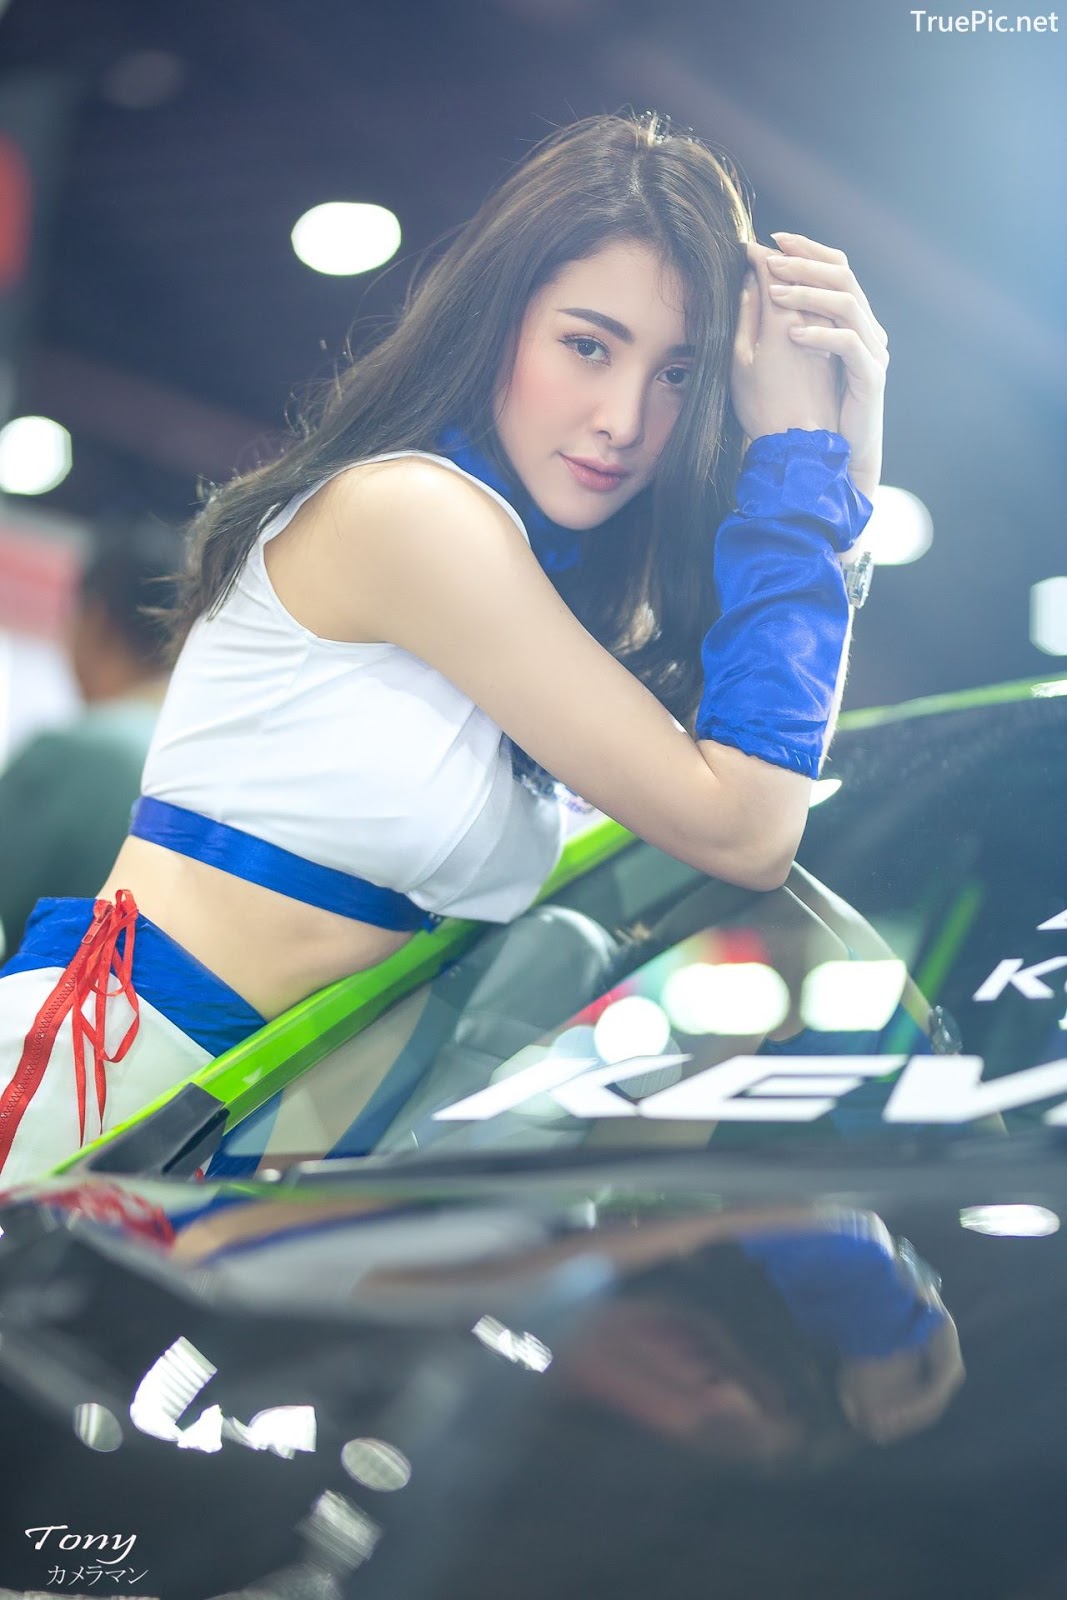 Image-Thailand-Hot-Model-Thai-Racing-Girl-At-Bangkok-Auto-Salon-2019-TruePic.net- Picture-77